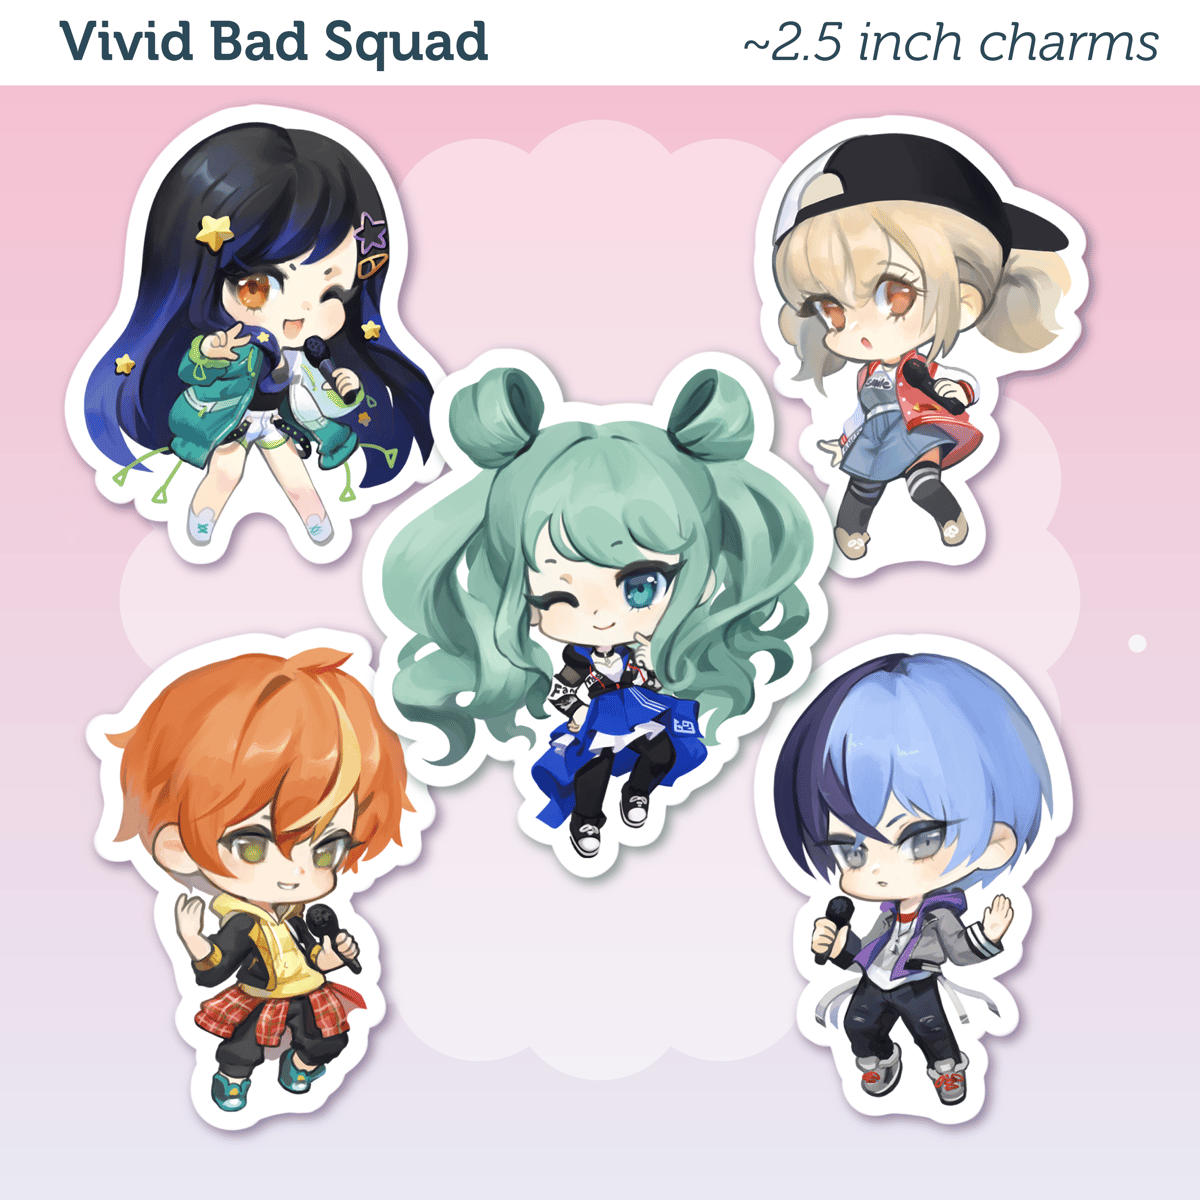 Image of Vivid Bad Squad 2.5" Charms